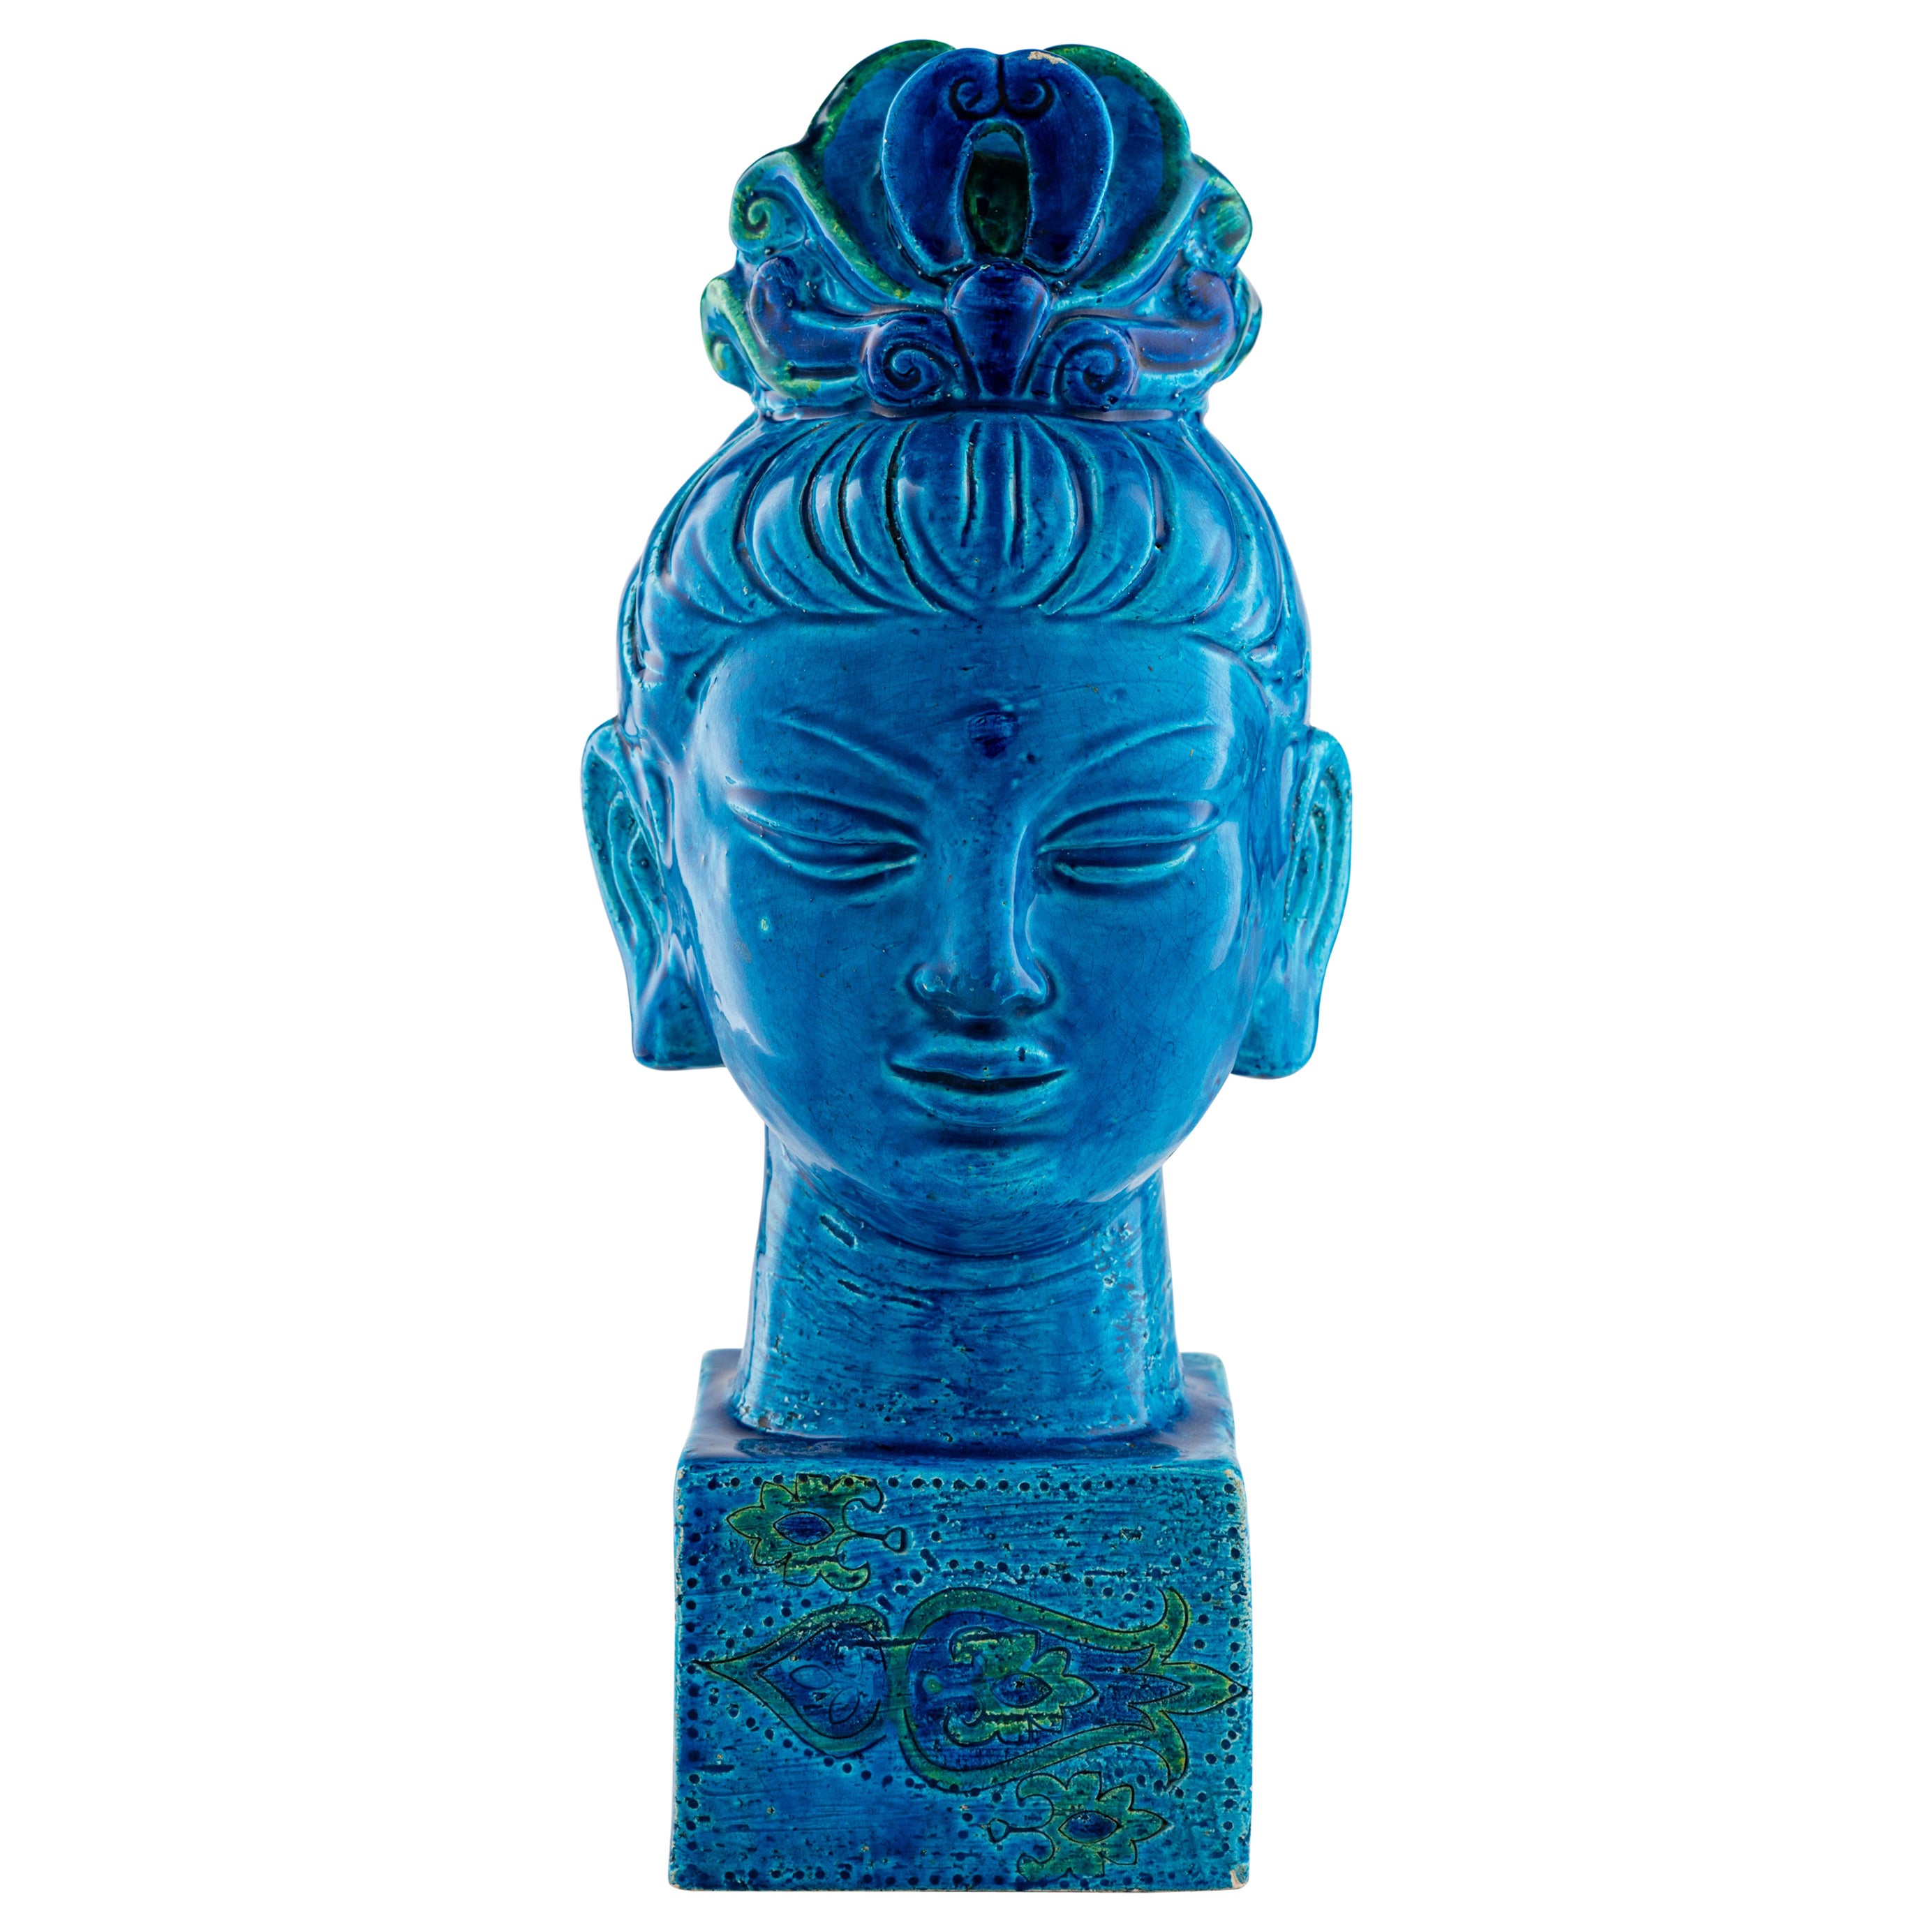 Bitossi Kwan Yin Buddha Coin Bank, Ceramic, Blue, Green Paisley, Signed For Sale